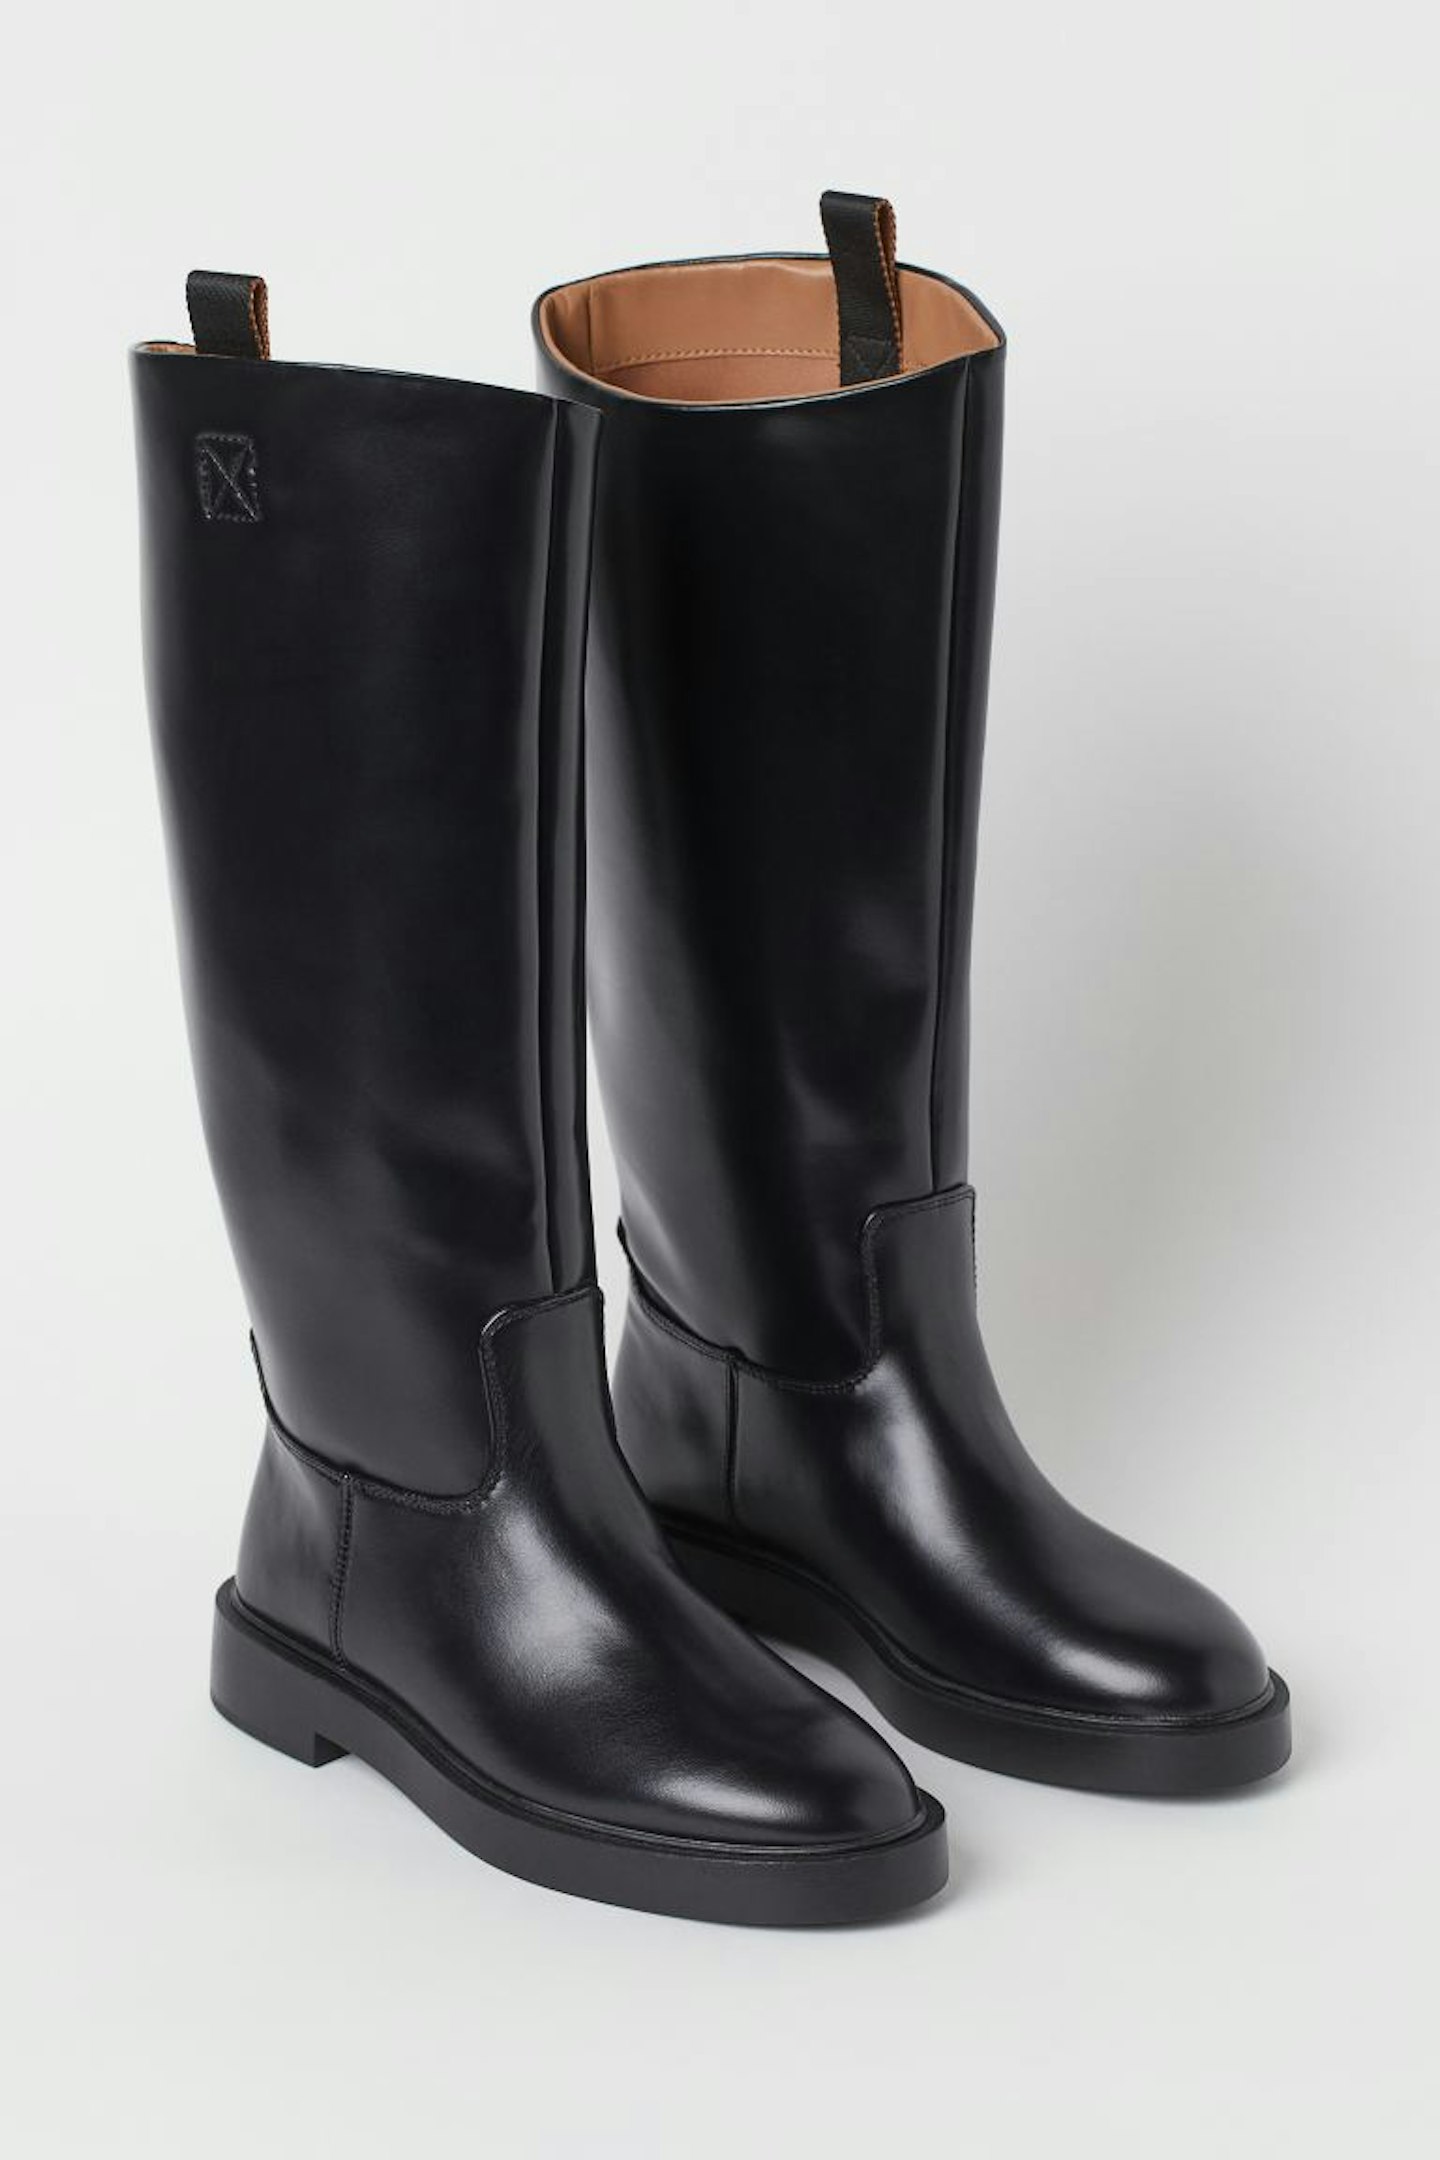 H&M, Knee High Boots, £49.99